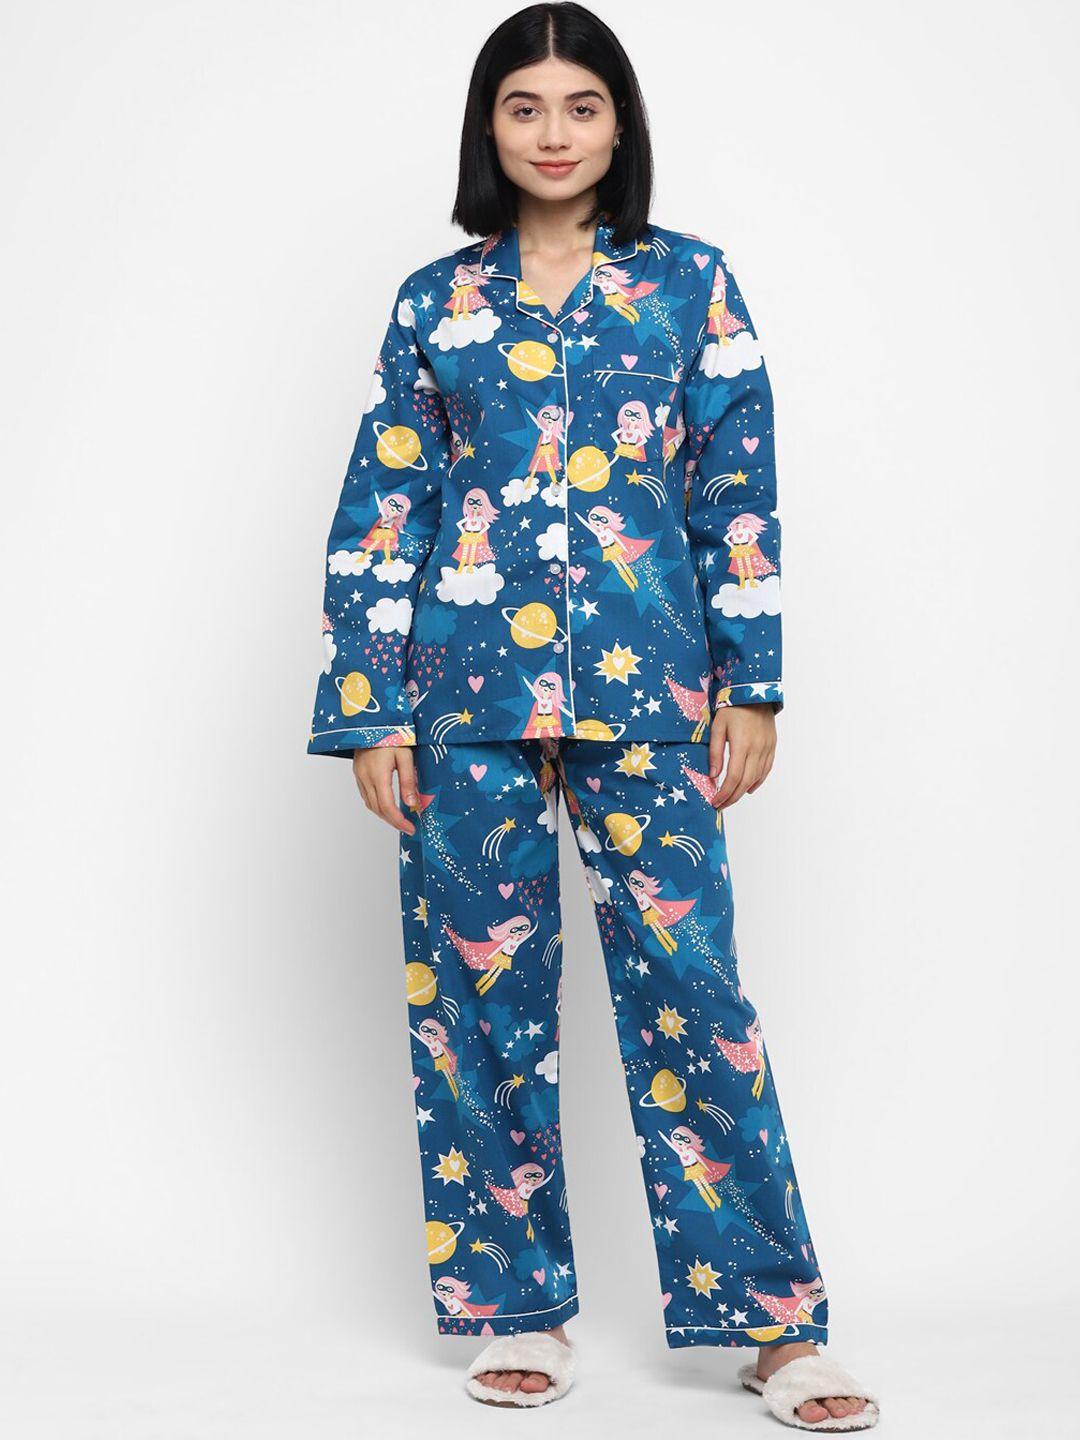 Shopbloom Woman Royal Blue Wonder Girl Print Long Sleeve Night Suit